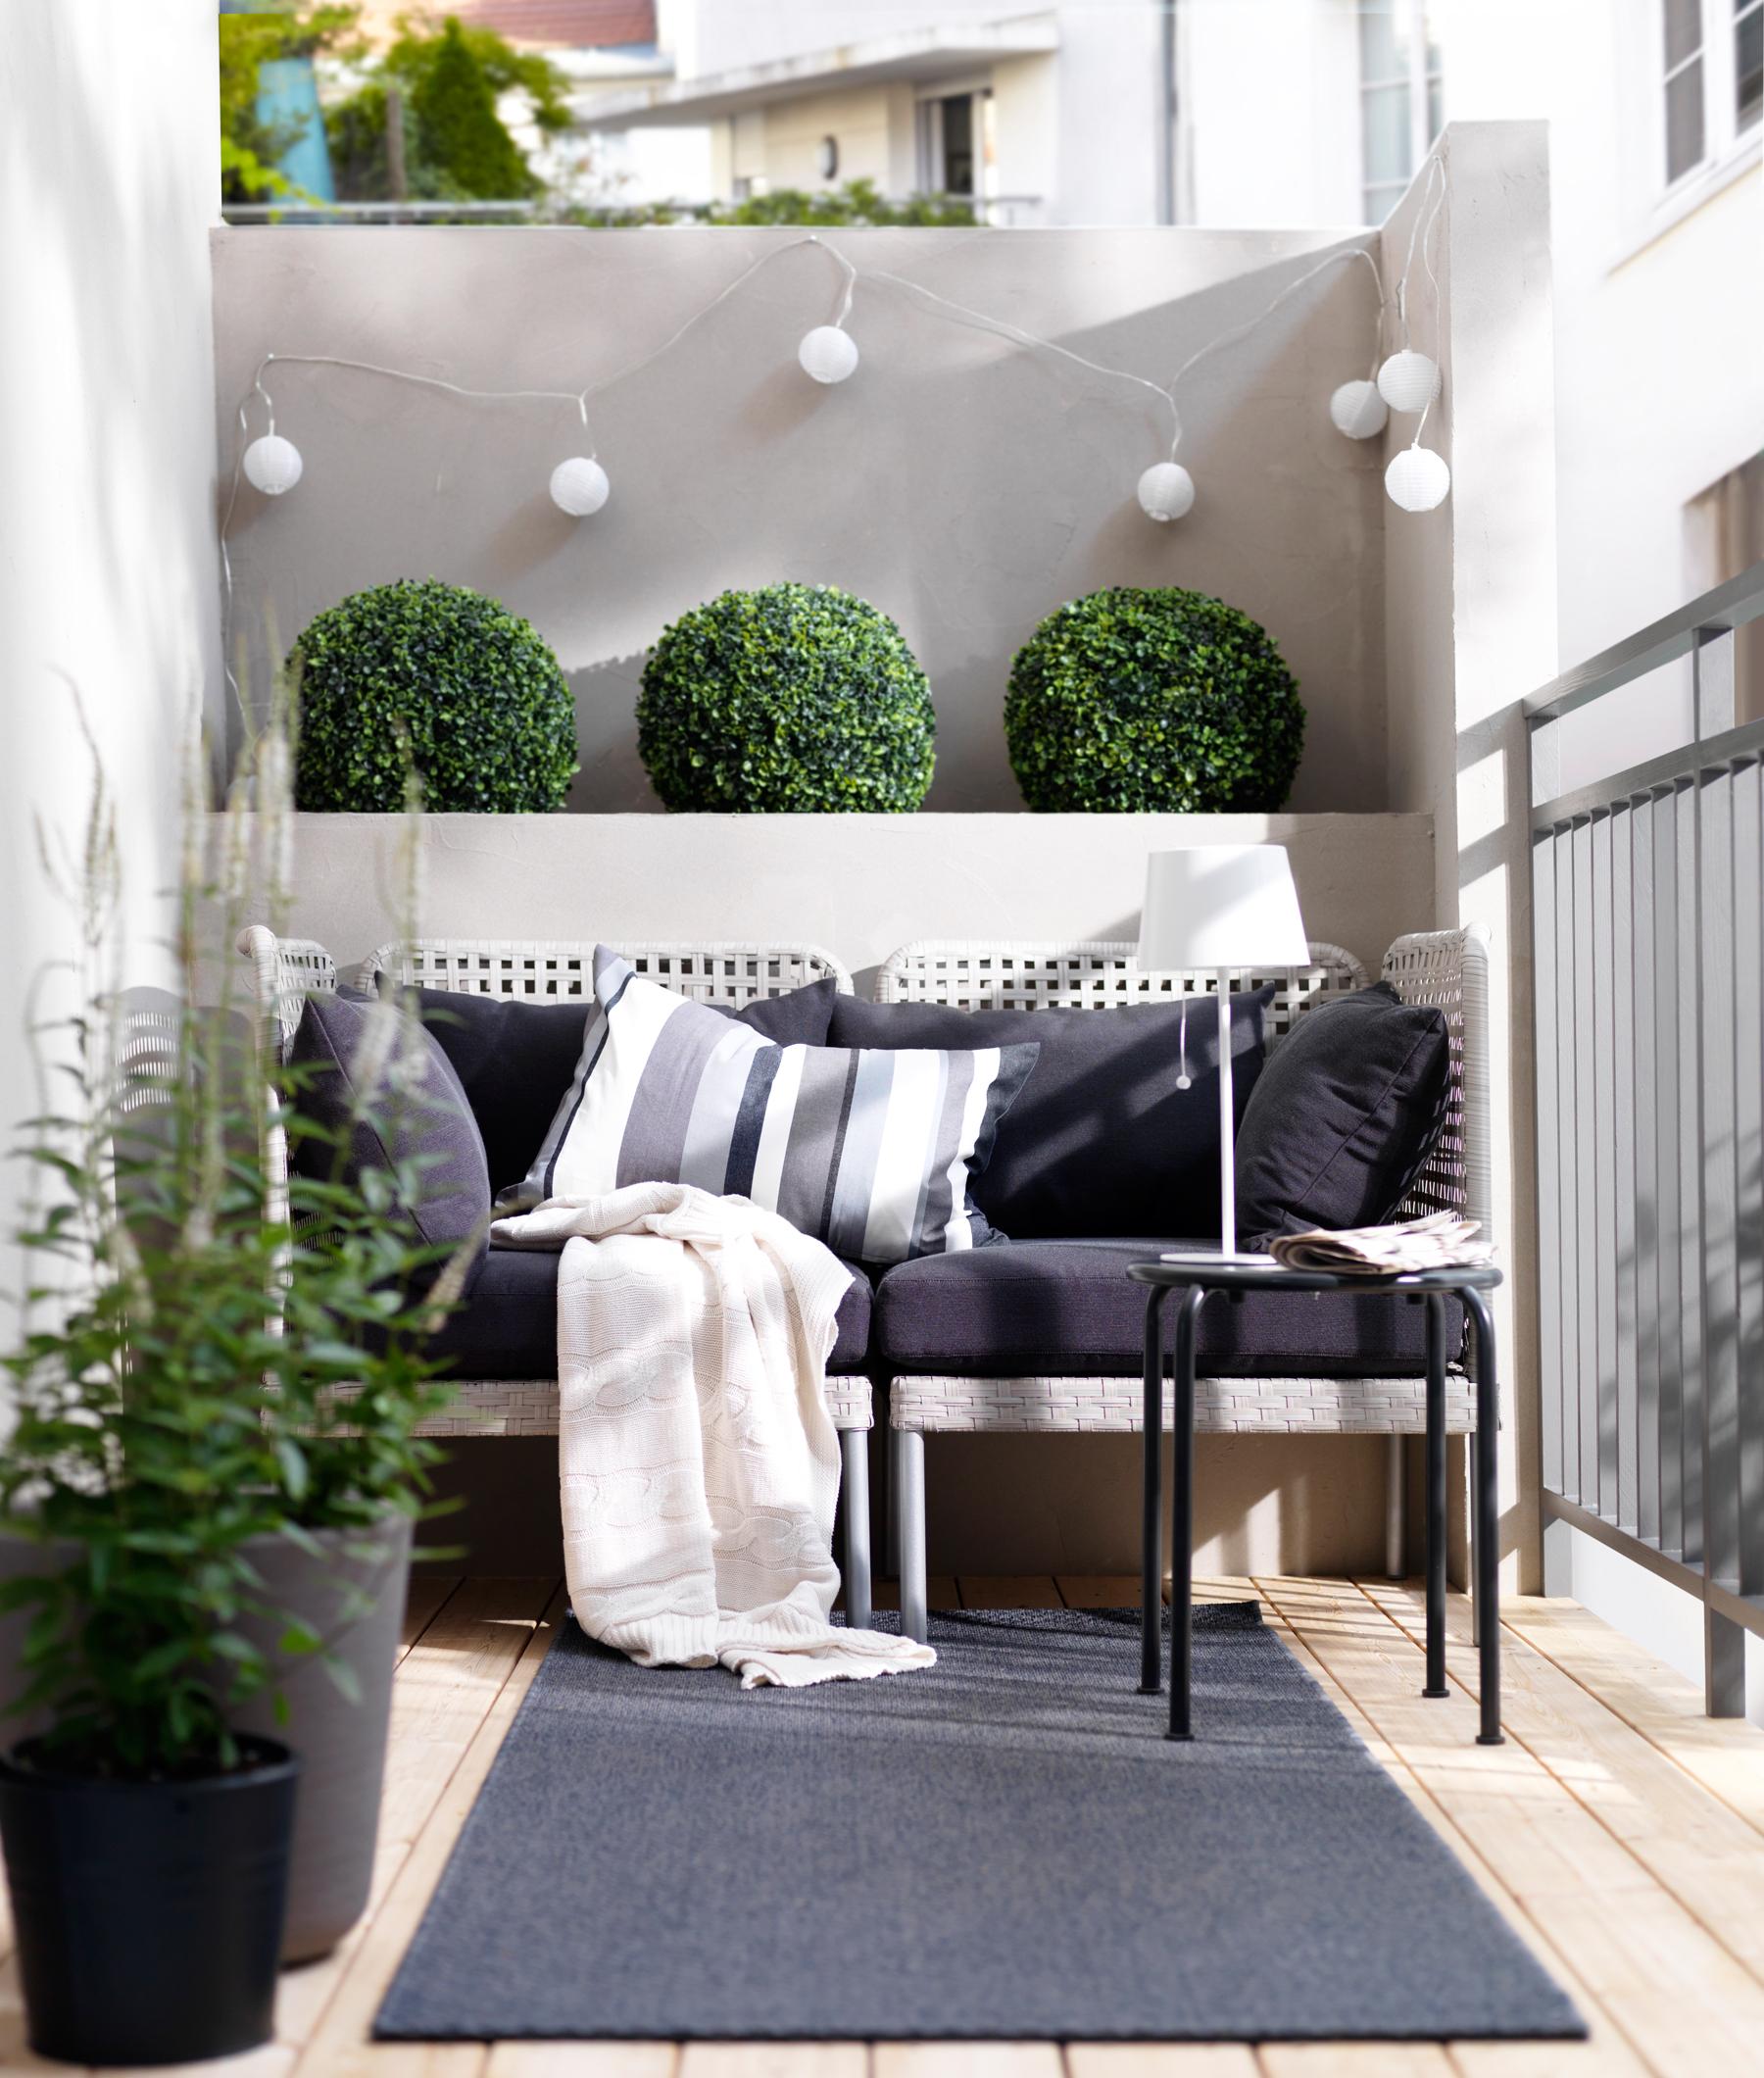 Gepolsterte Sitzbank in Grautönen #mediterran #kissen #ikea #sitzbank #balkonmöbel #terrassenmöbel #hausgestaltung ©Inter IKEA Systems B.V